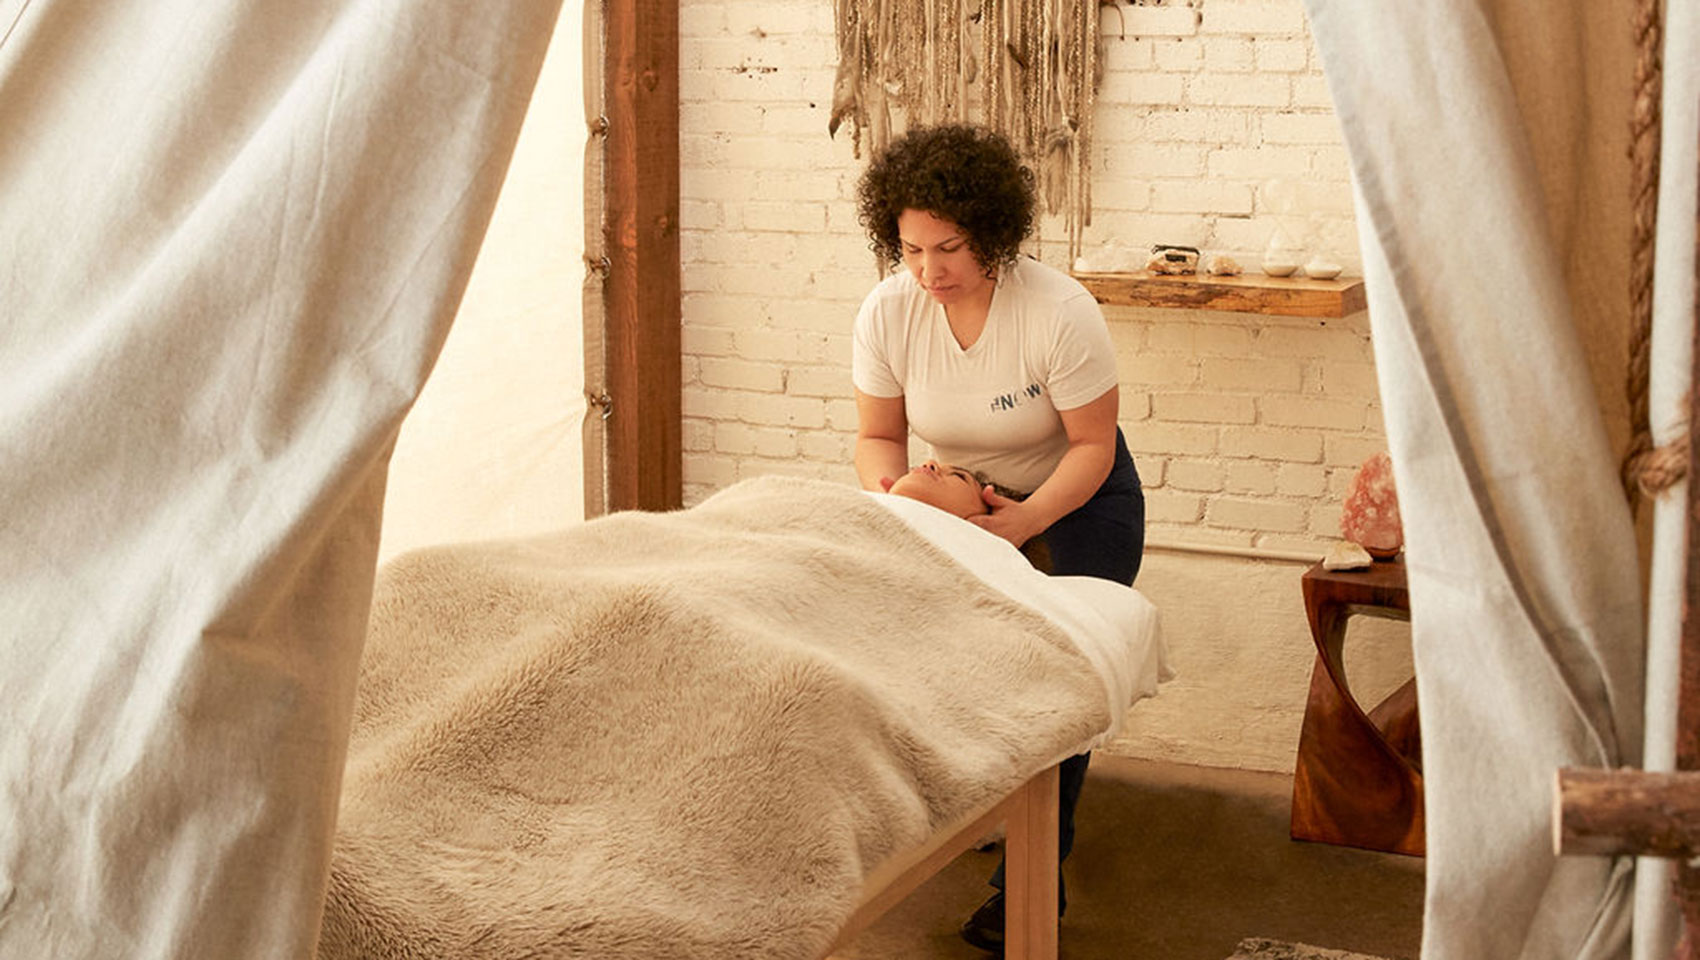 Massage therapist massaging client